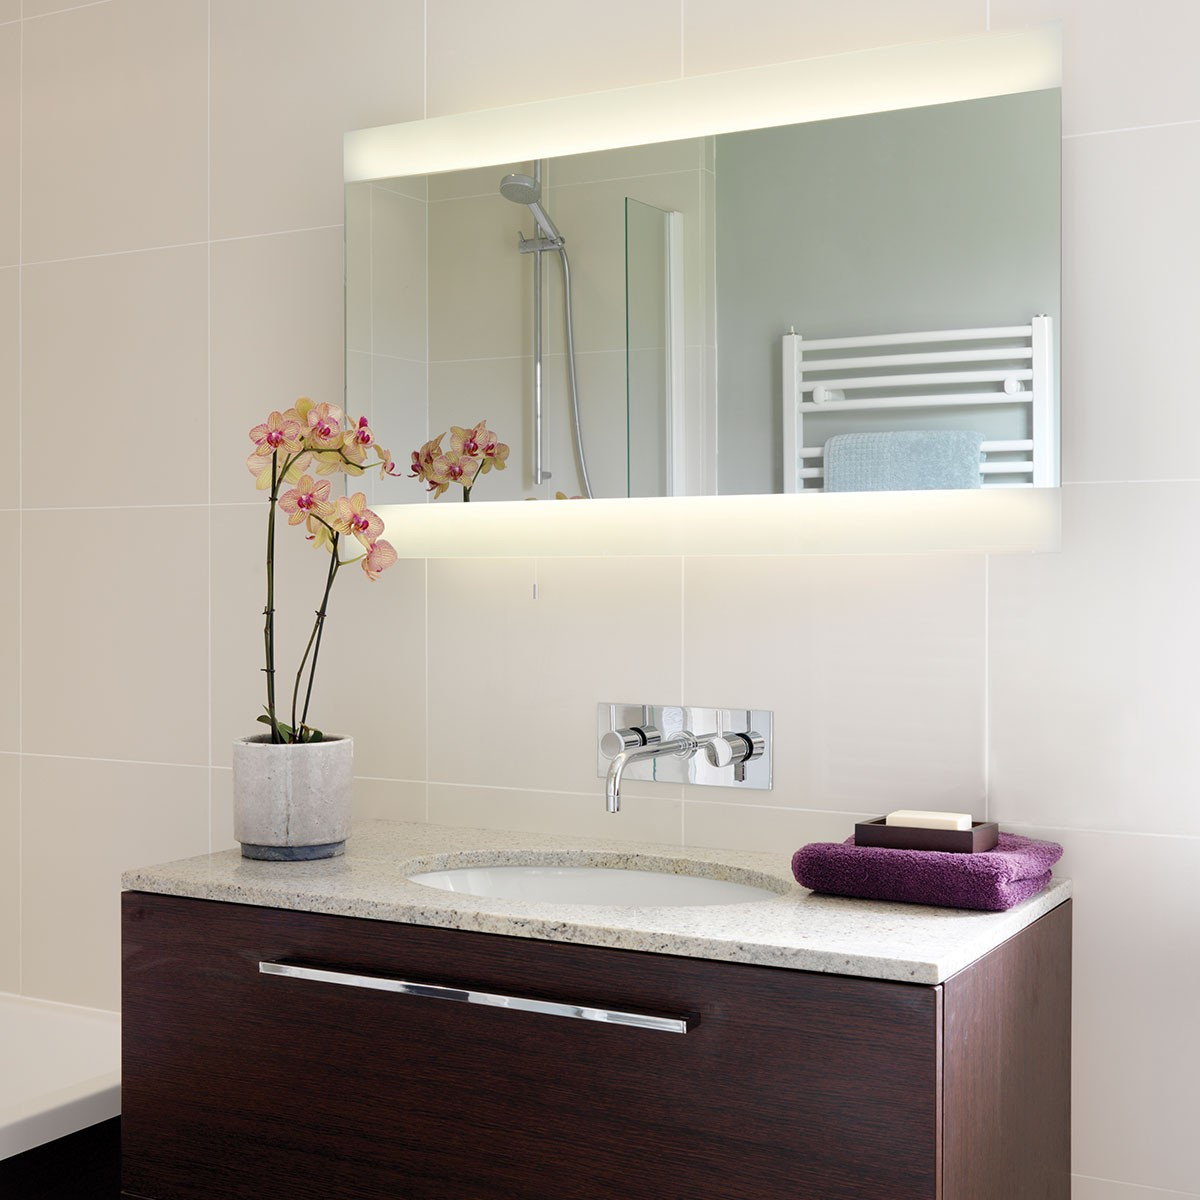 Bathroom Mirror With Light
 Astro Fuji Wide 950 Bathroom Mirror Light at UK Electrical